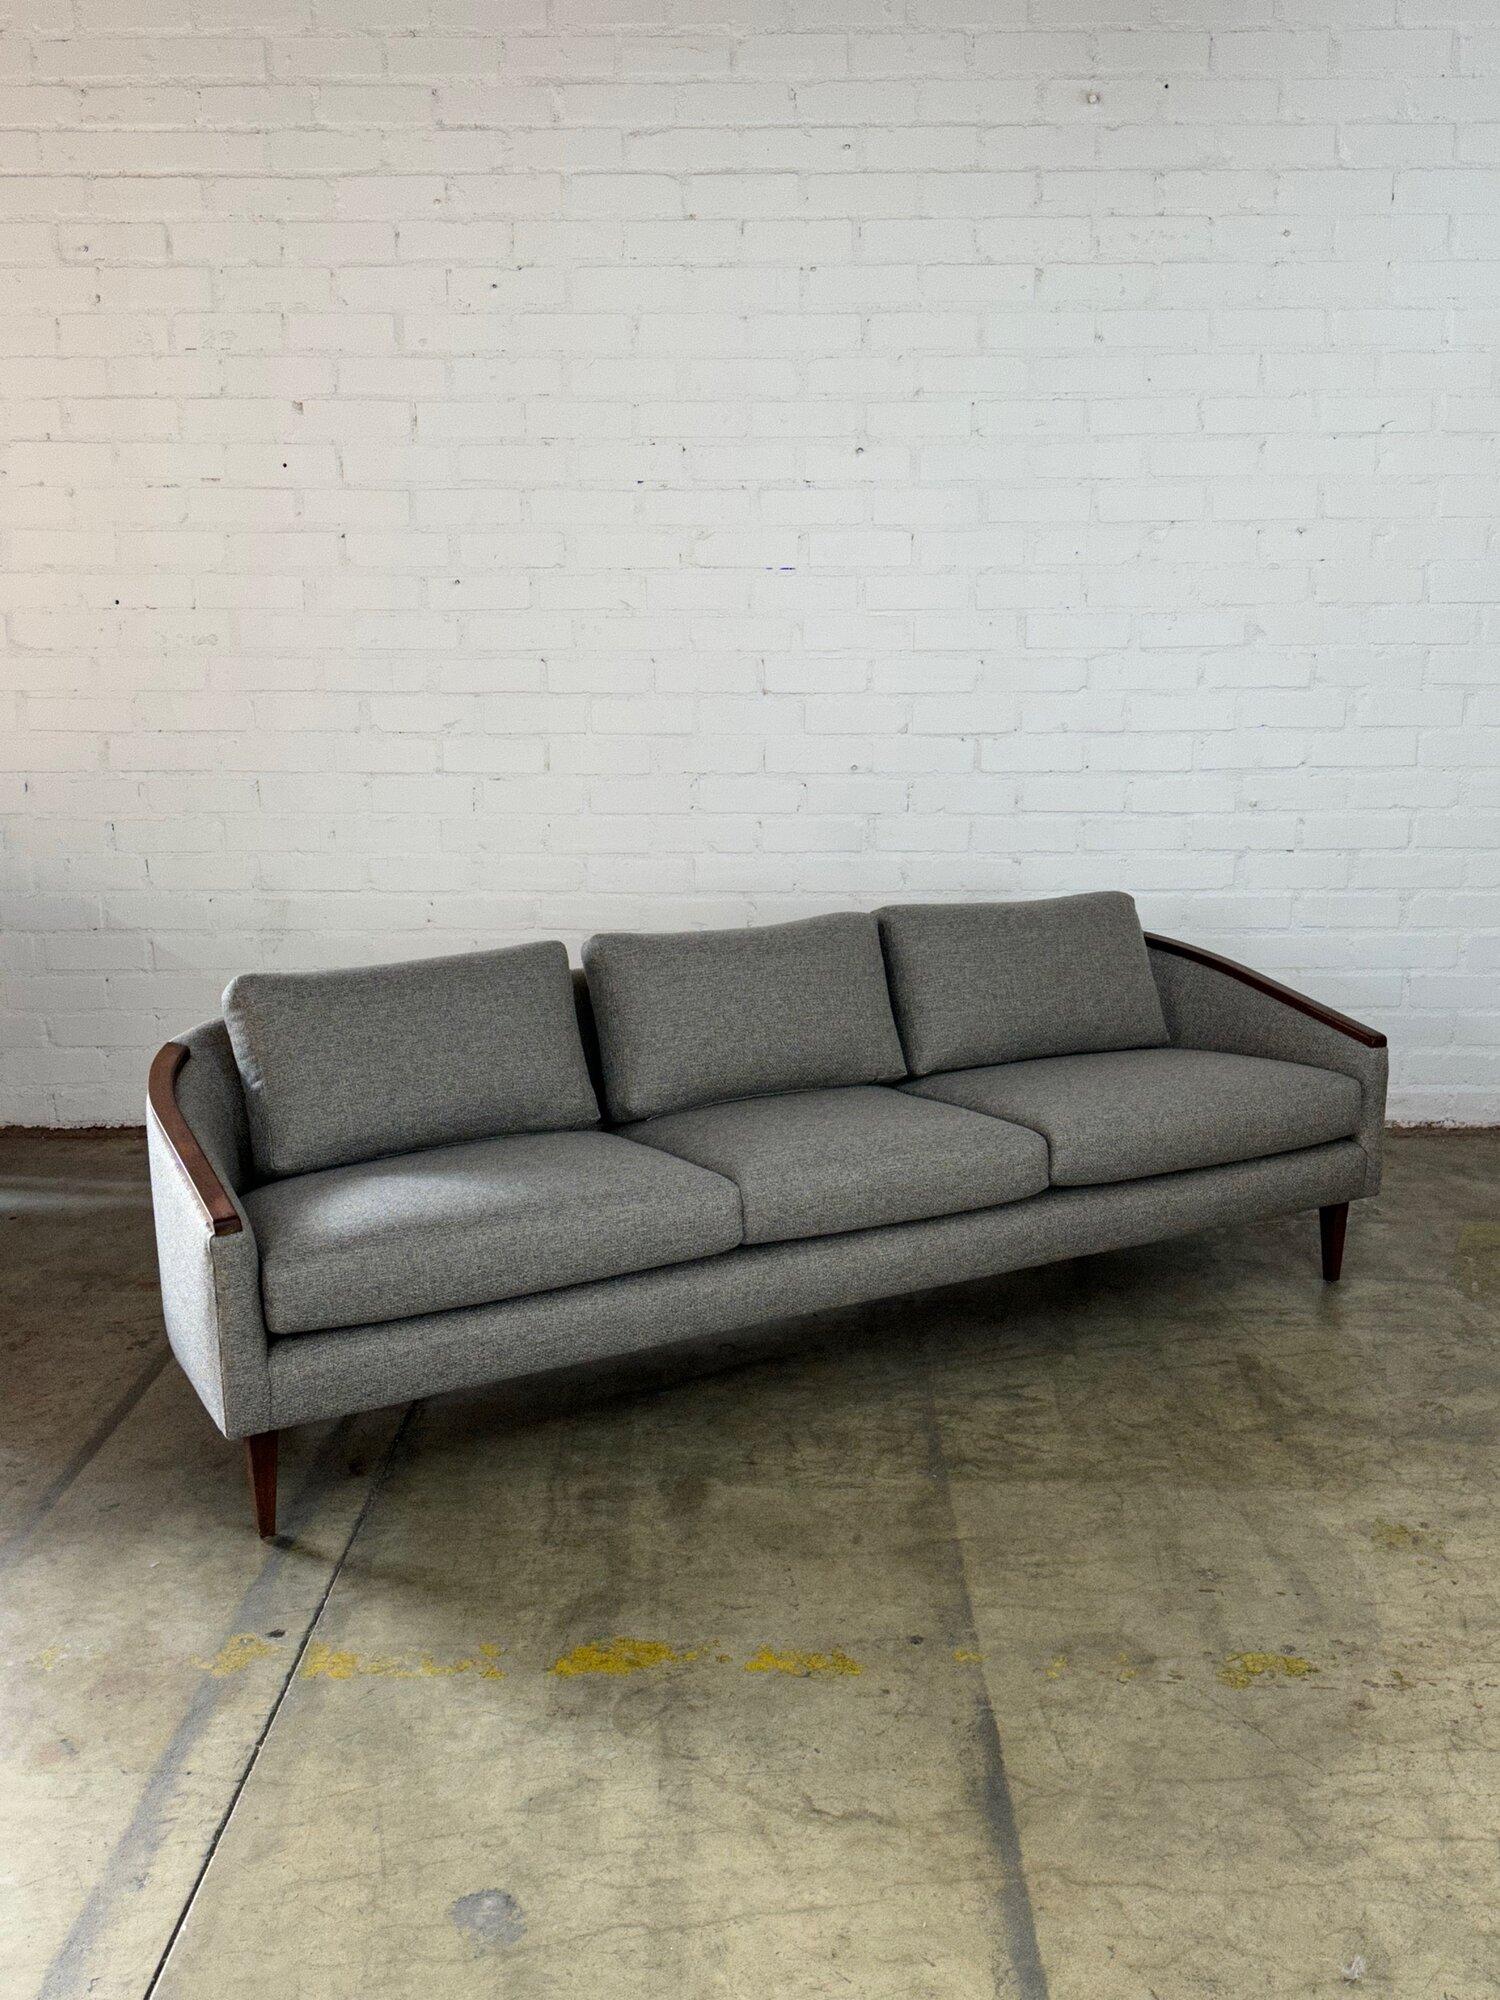 American Low Profile Midcentury Sofa in Grey